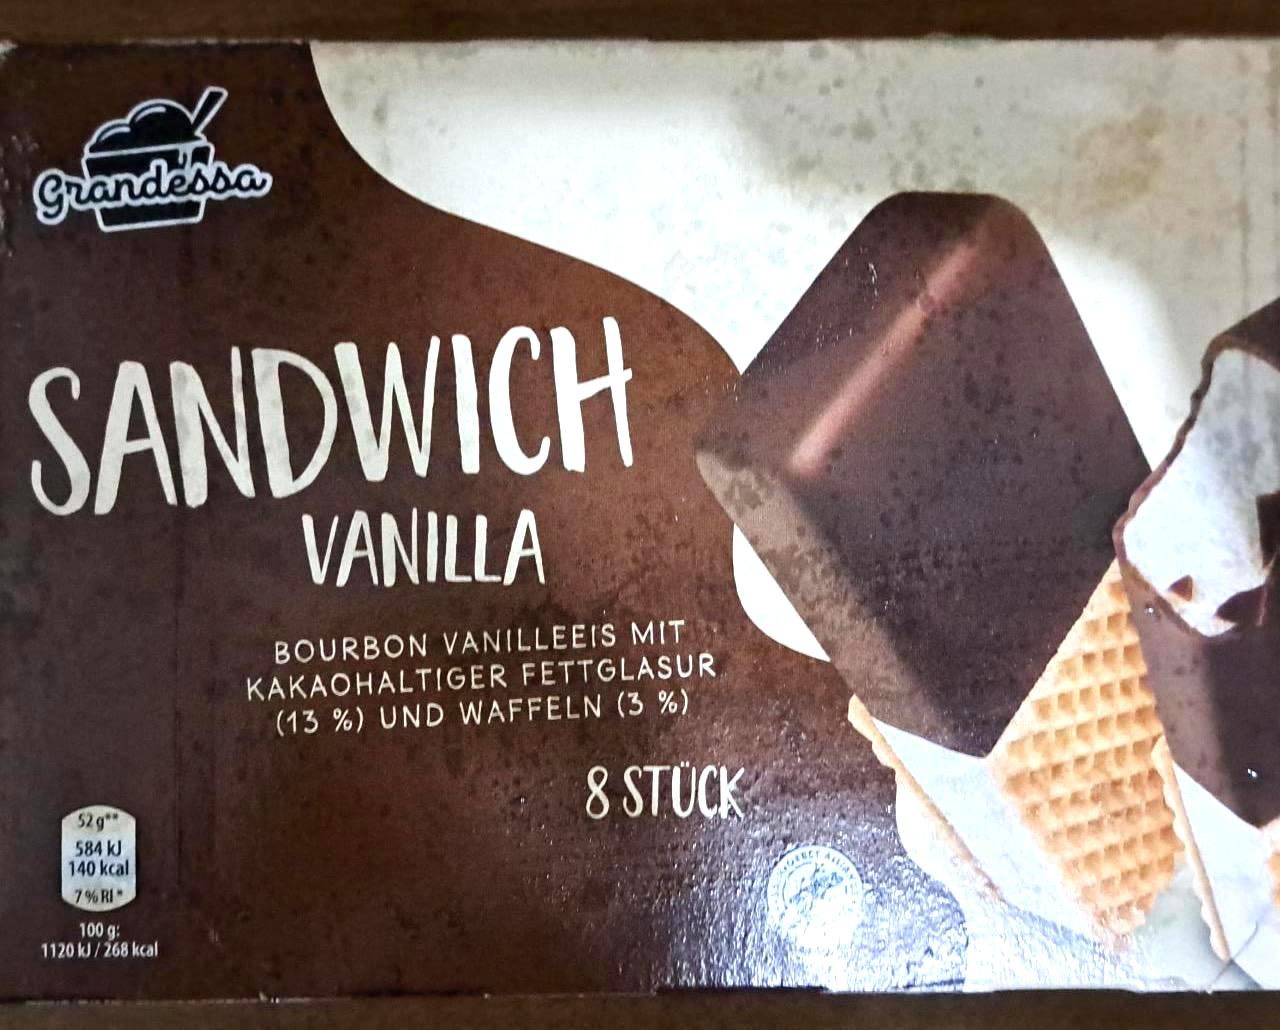 Képek - Sandwich vanilla Grandessa